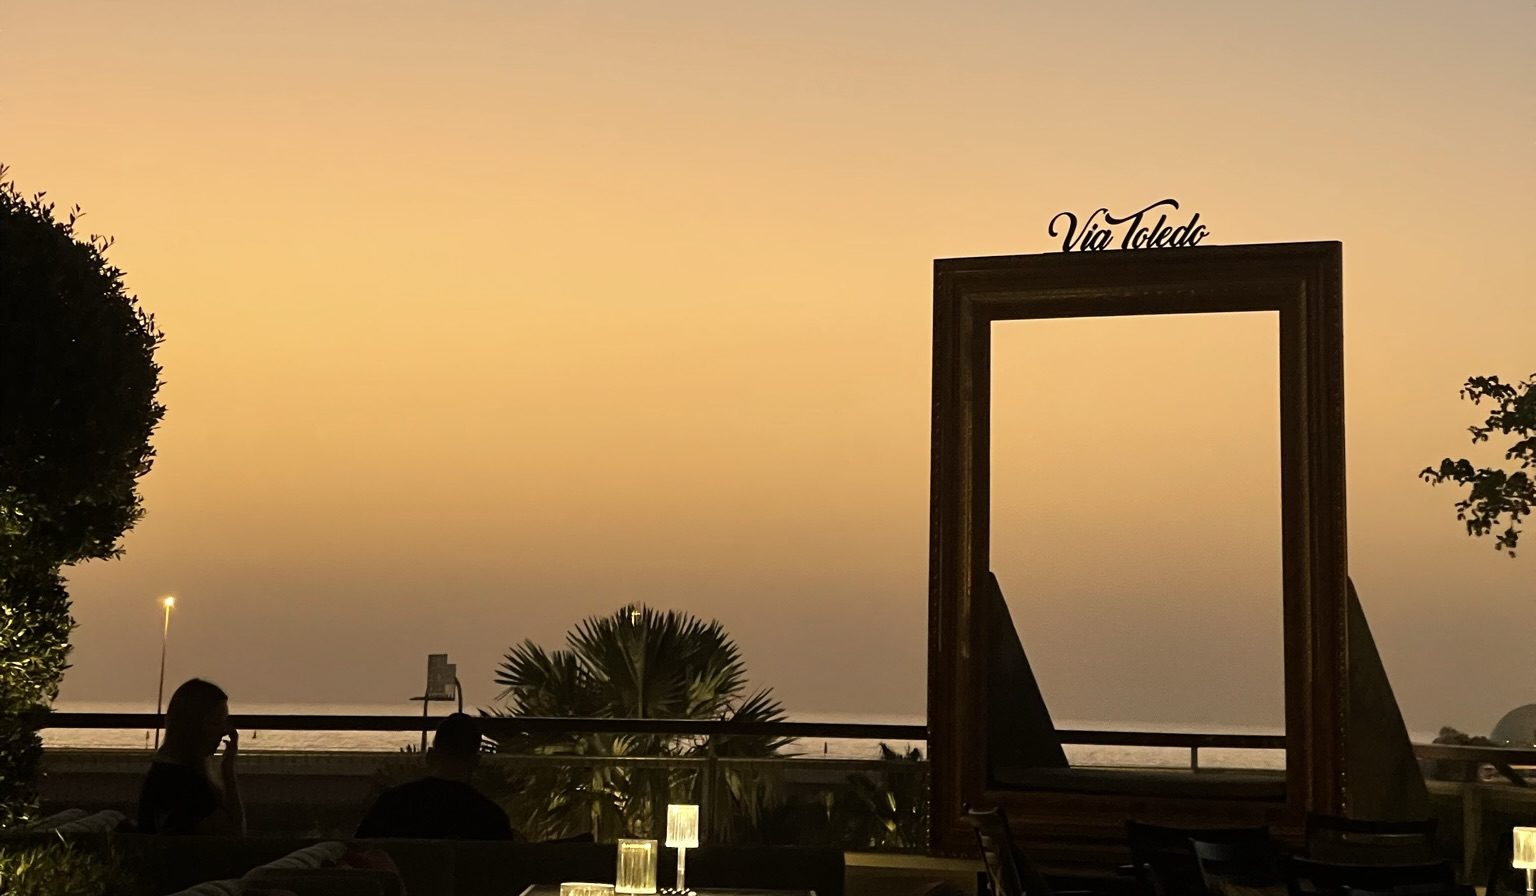 Savour an beautiful Italian summer season with internationally famend Via Toledo, now open at Address Beach Resort JBR